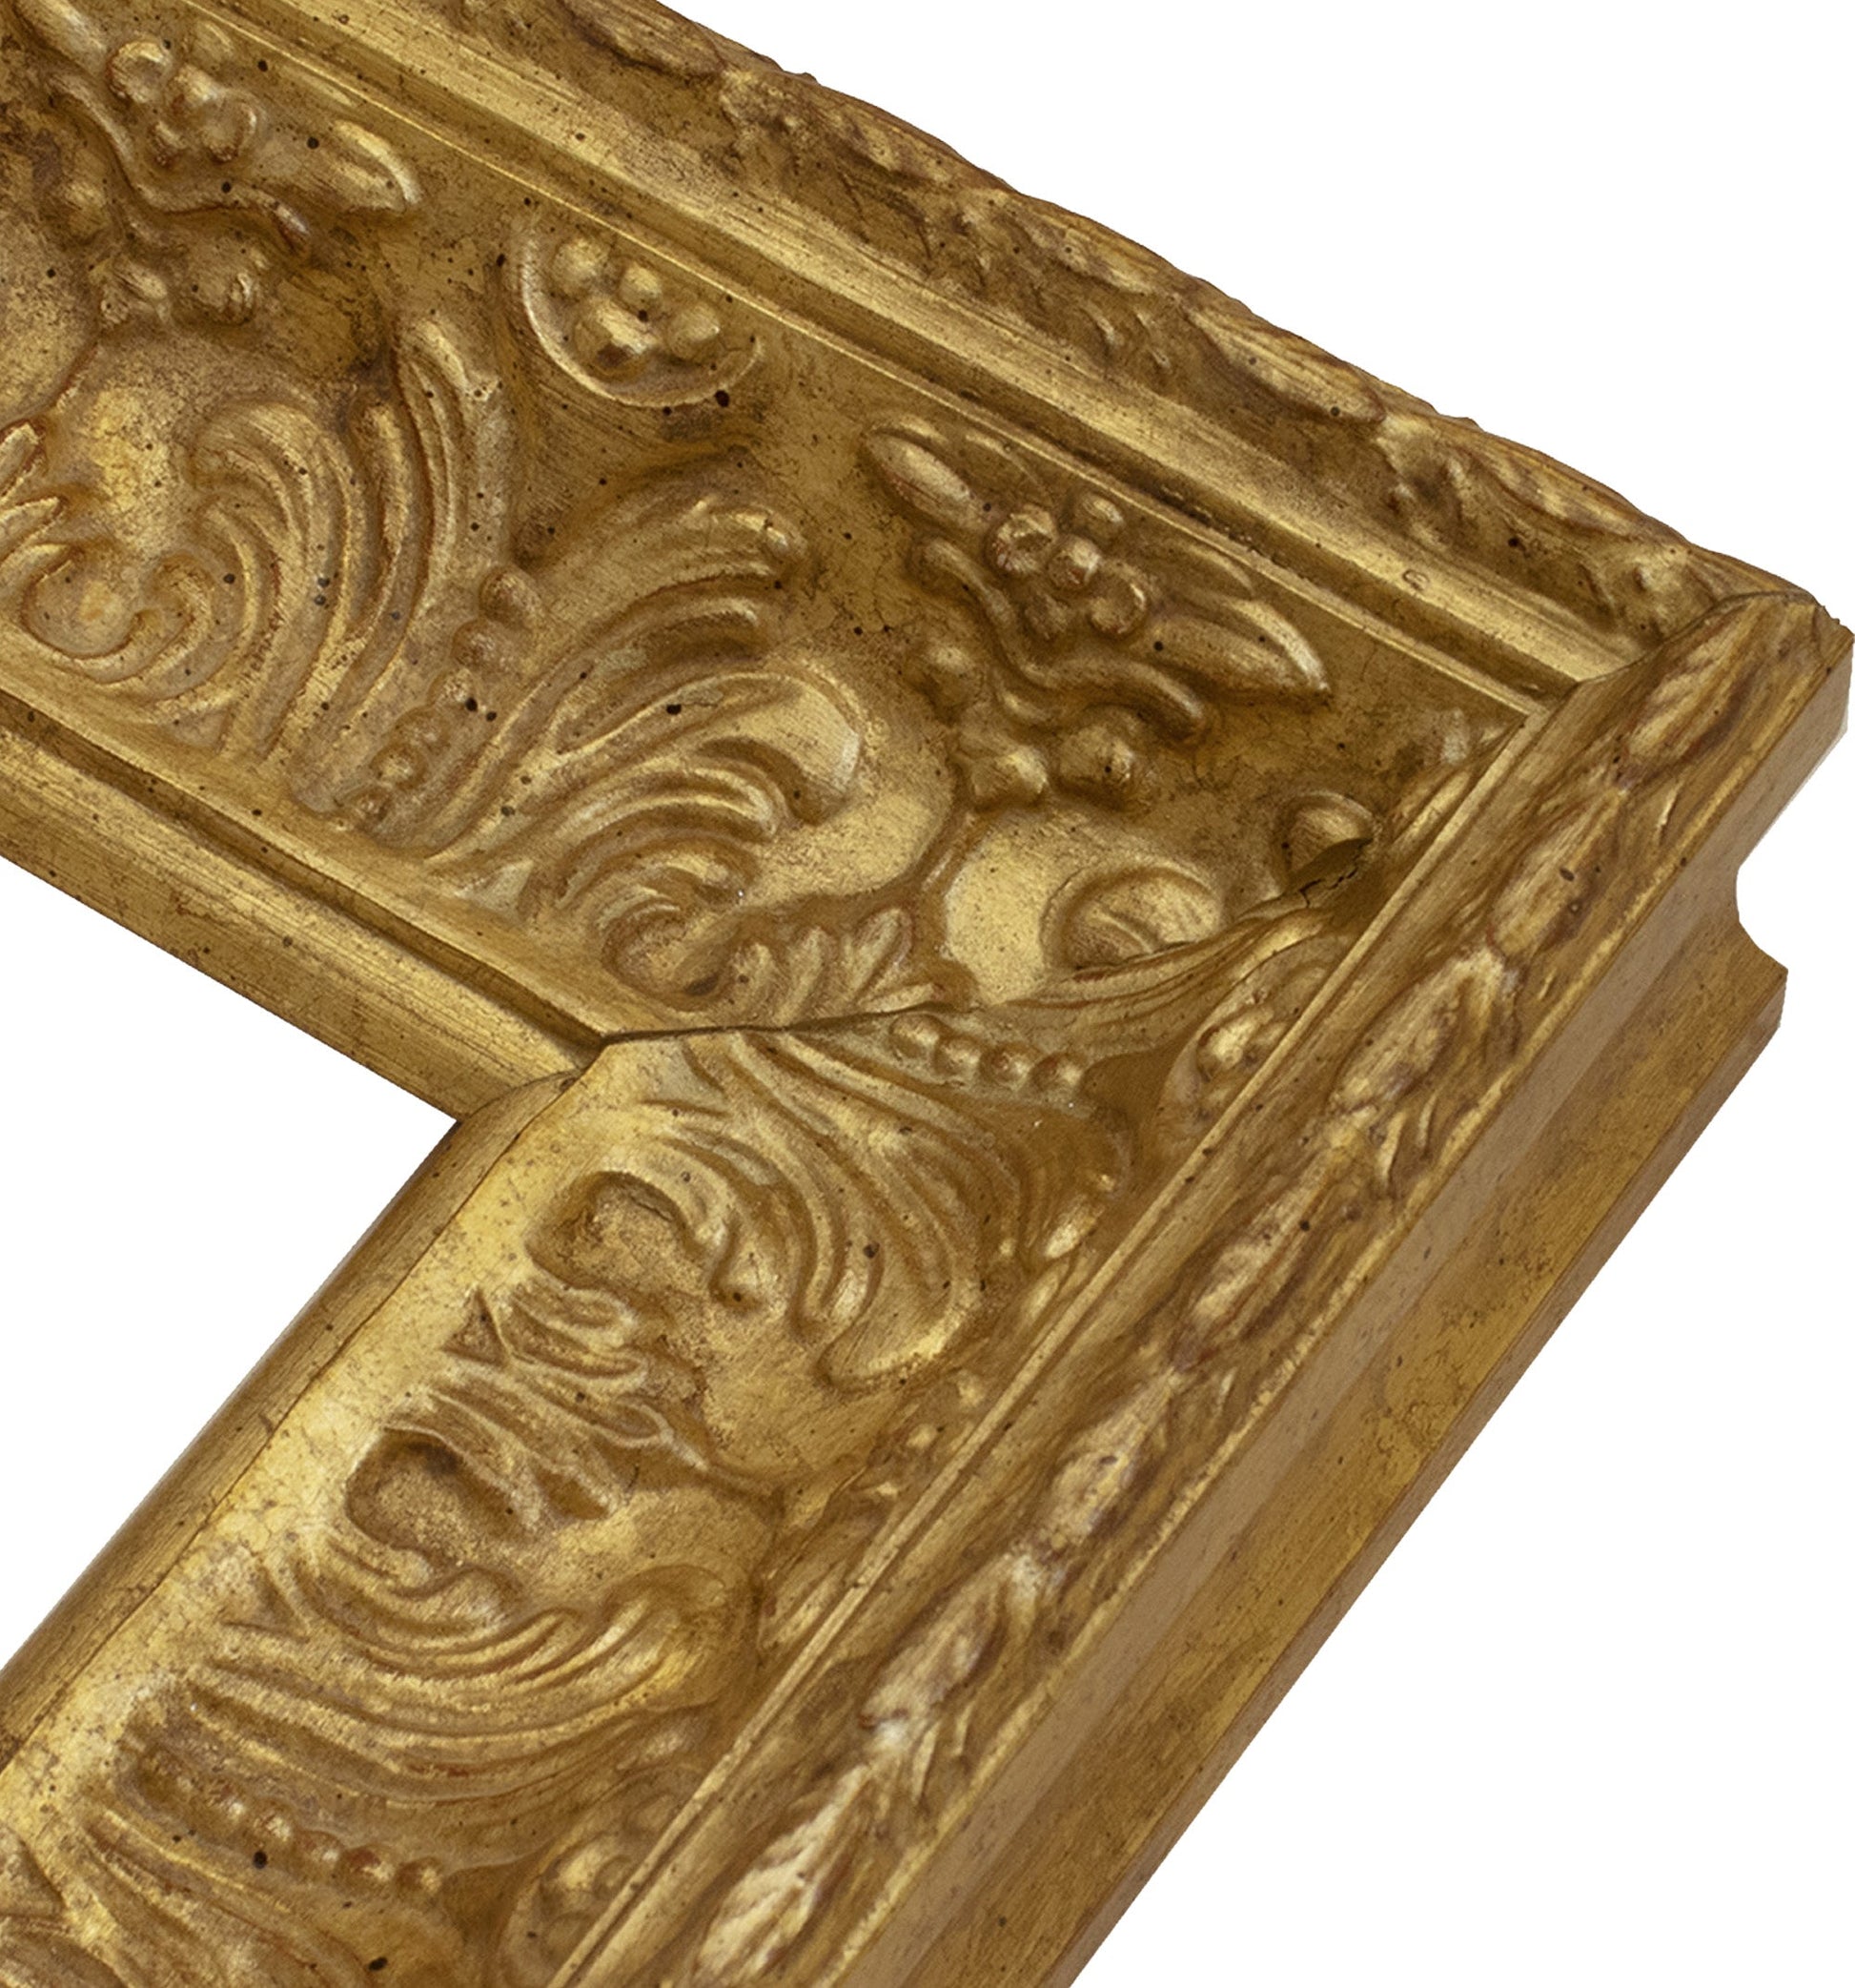 6300.010 cadre en bois à la feuille d'or mesure de profil 90x73 mm Lombarda cornici S.n.c.